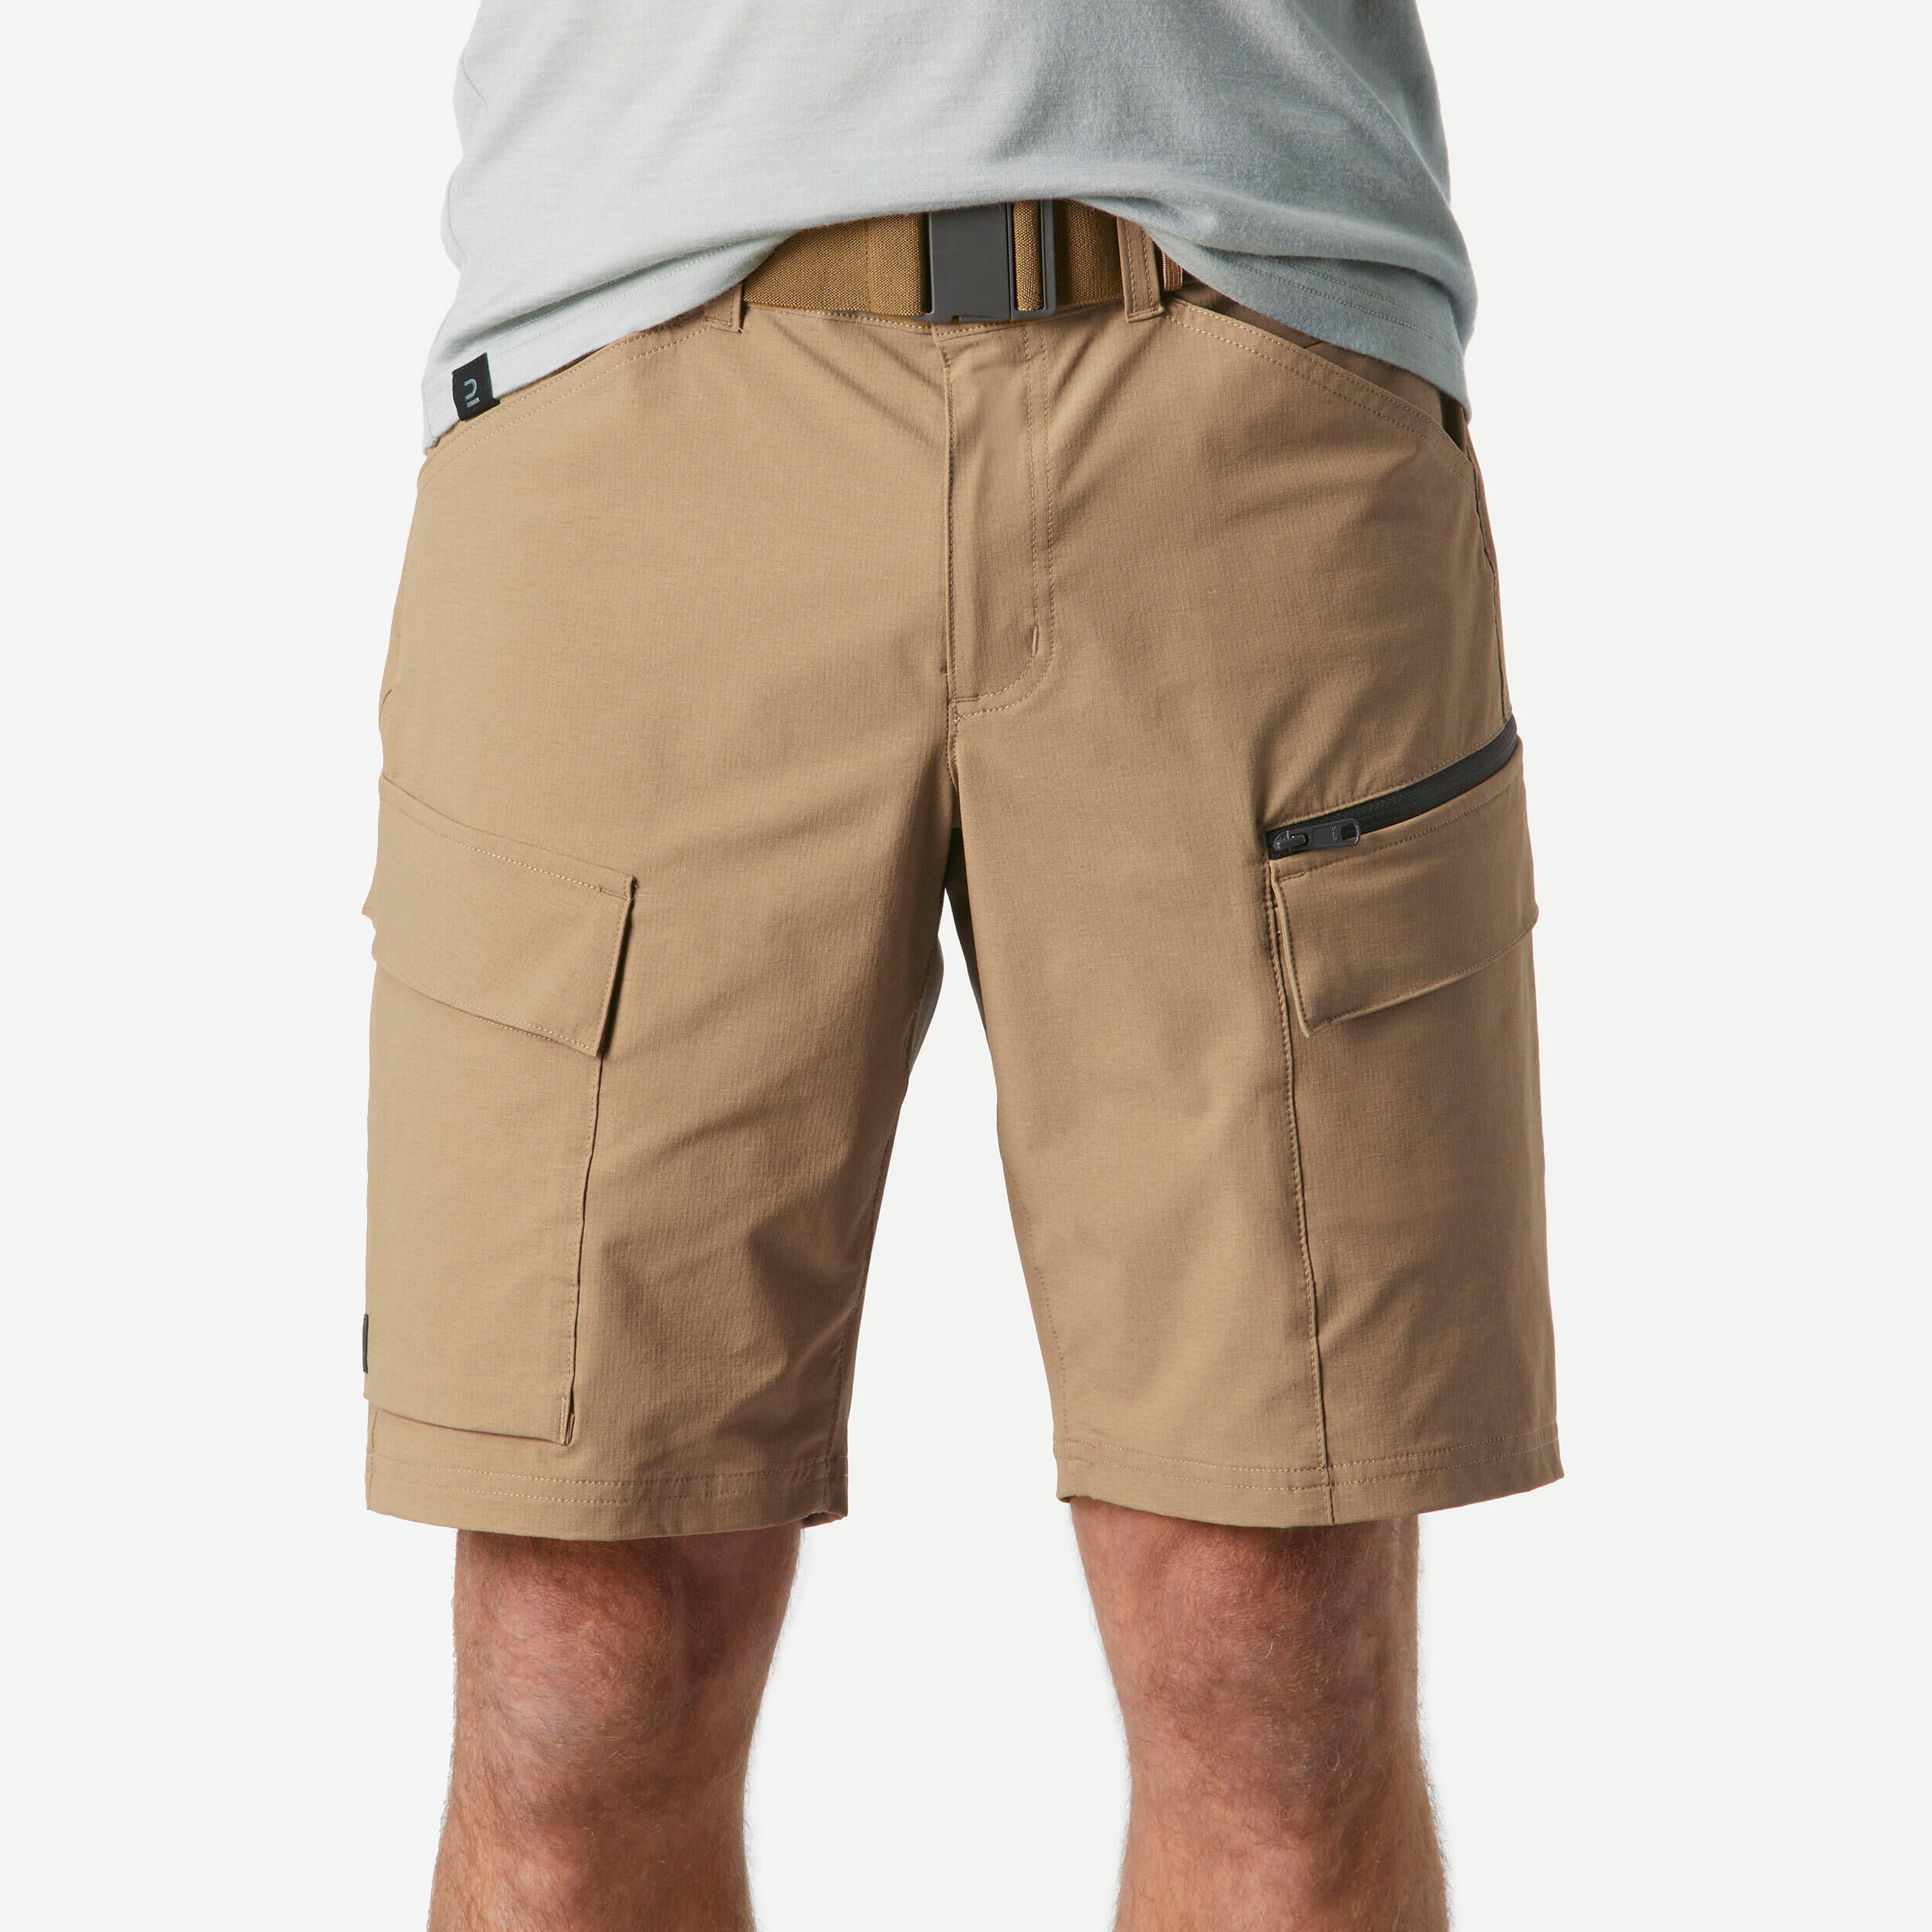 FORCLAZ Men’s Shorts - Travel 900 Brown